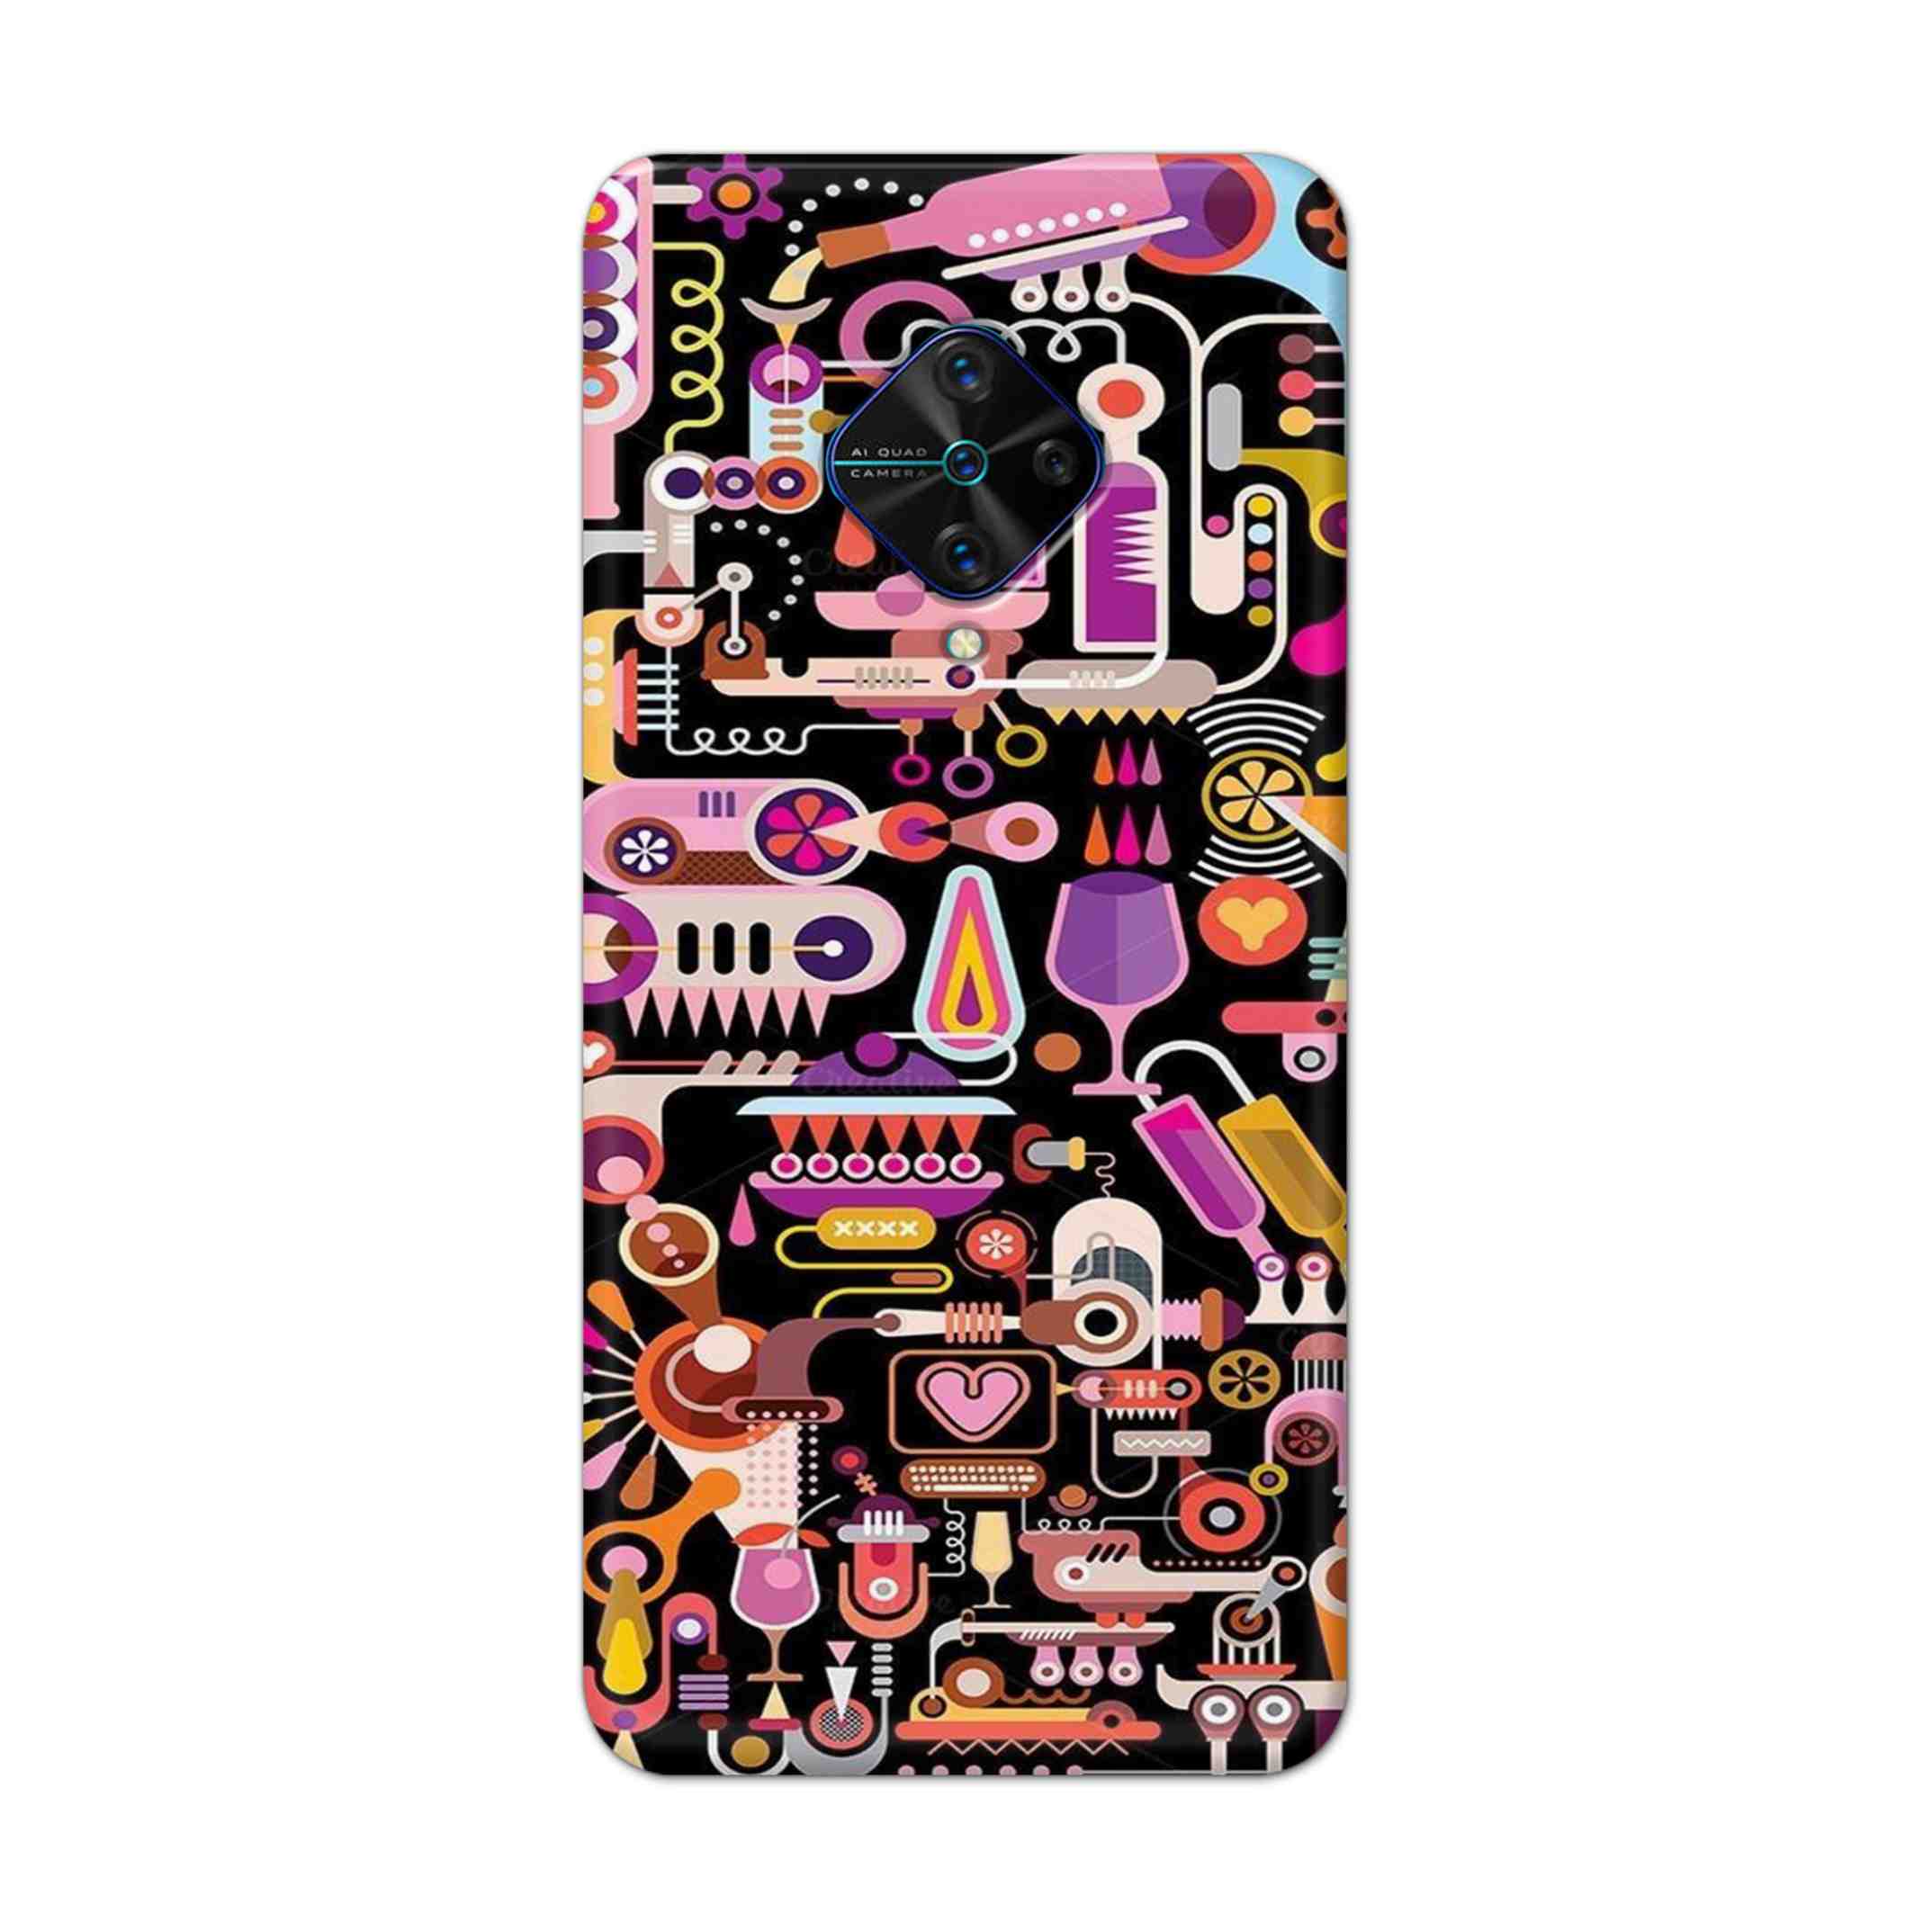 Buy Lab Art Hard Back Mobile Phone Case Cover For Vivo S1 Pro Online